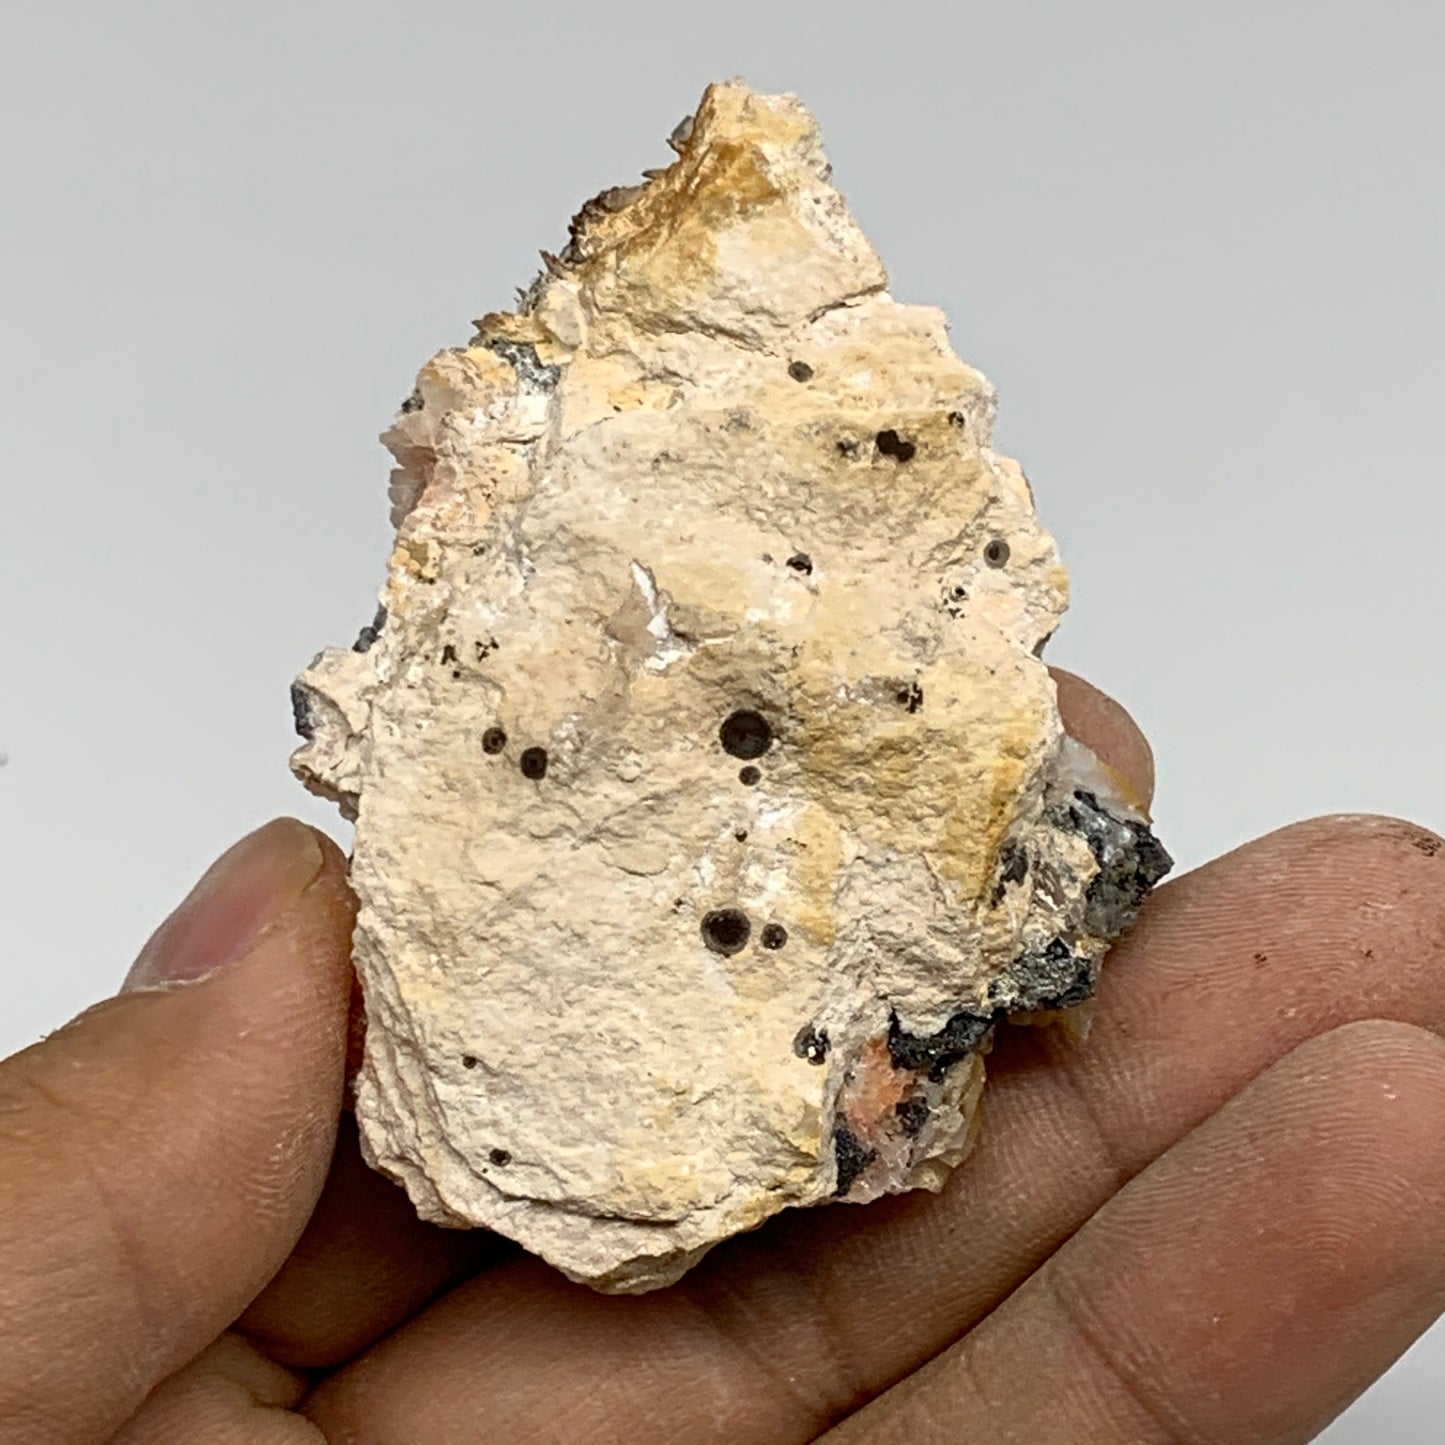 75.7g, 2.6"x1.8"x0.9", Barite with Cerussite on Galena Mineral Specimen, B33516